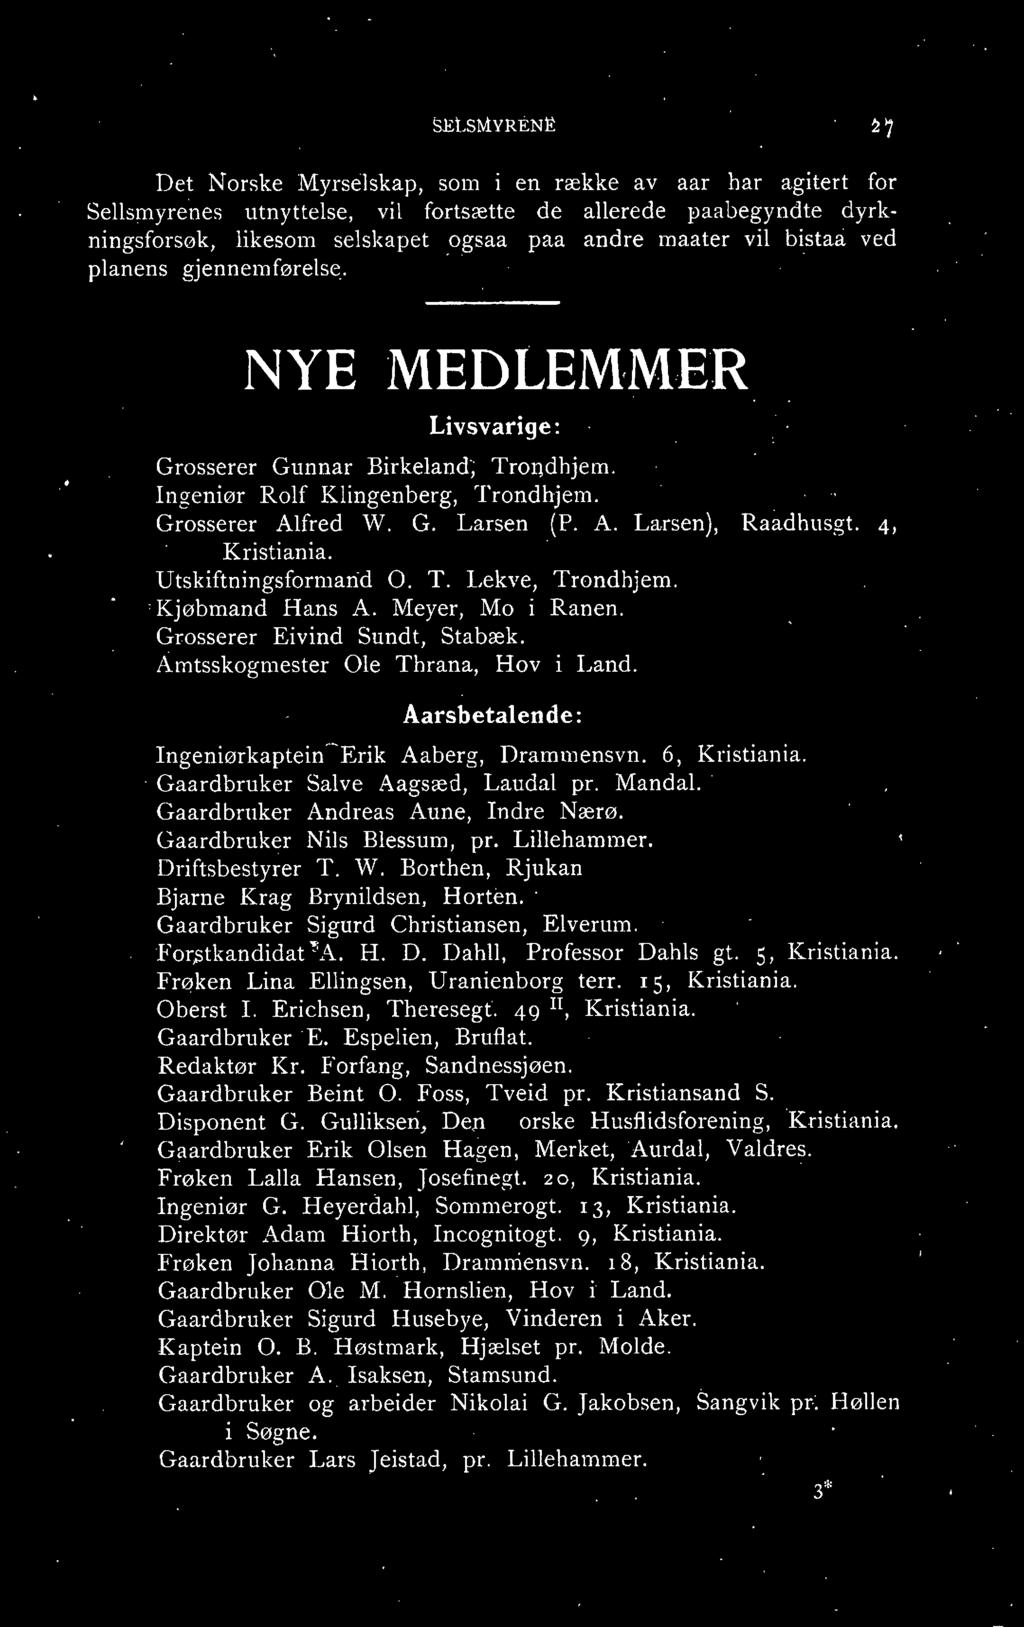 Grosserer Alfred W. G. Larsen '(P. A. Larsen), Raadhusgt., 4 1 Kristiania. Utskiftningsformarid 0. T. Lekve, Trondhjem.,.Kjøbmand Hans A. Meyer, Mo i Ranen. Grosserer Eivind Sundt, Stabæk.